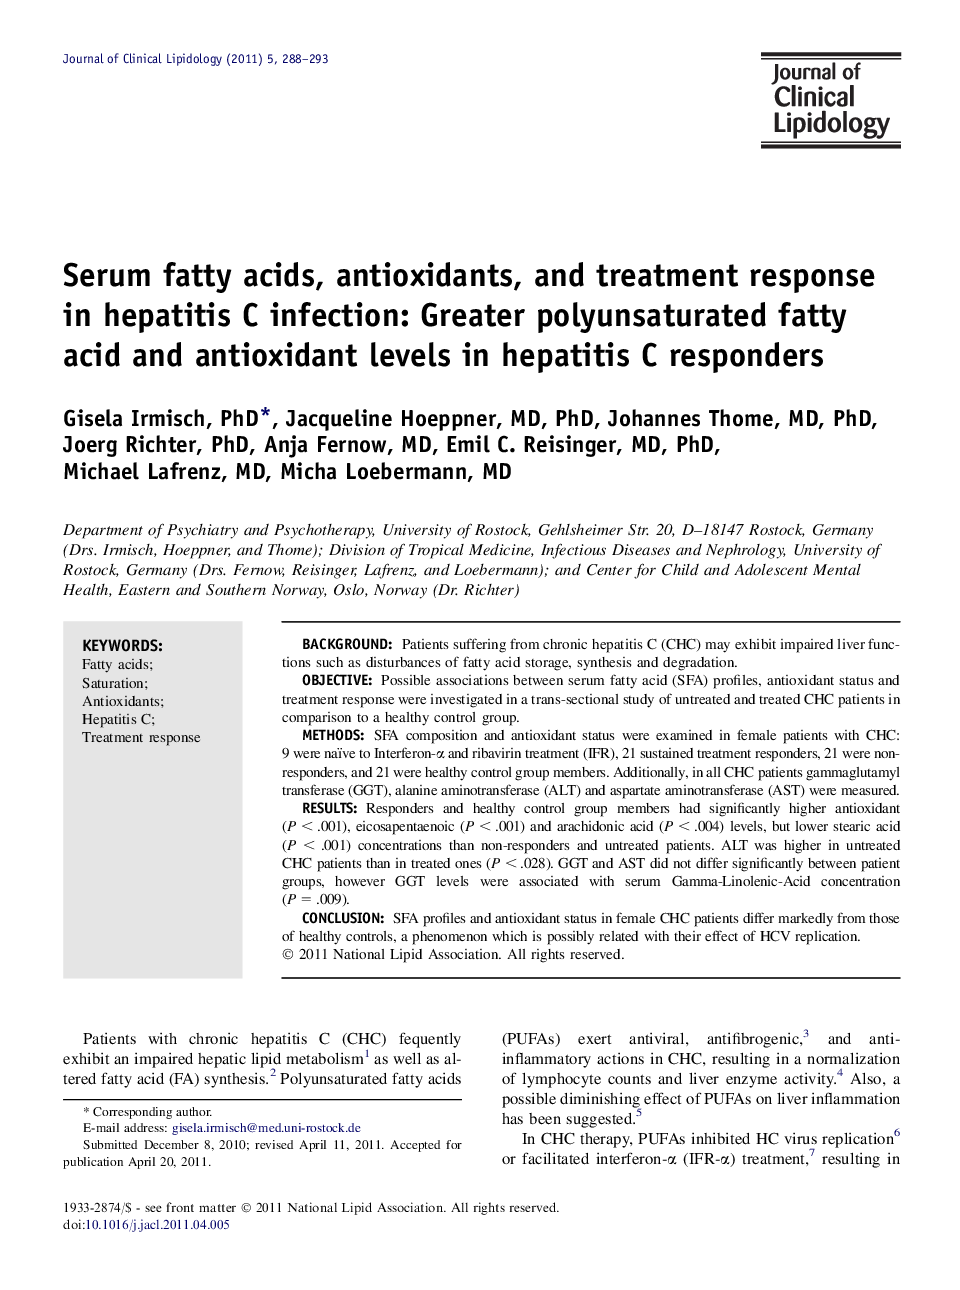 Serum fatty acids, antioxidants, and treatment response in hepatitis C infection: Greater polyunsaturated fatty acid and antioxidant levels in hepatitis C responders